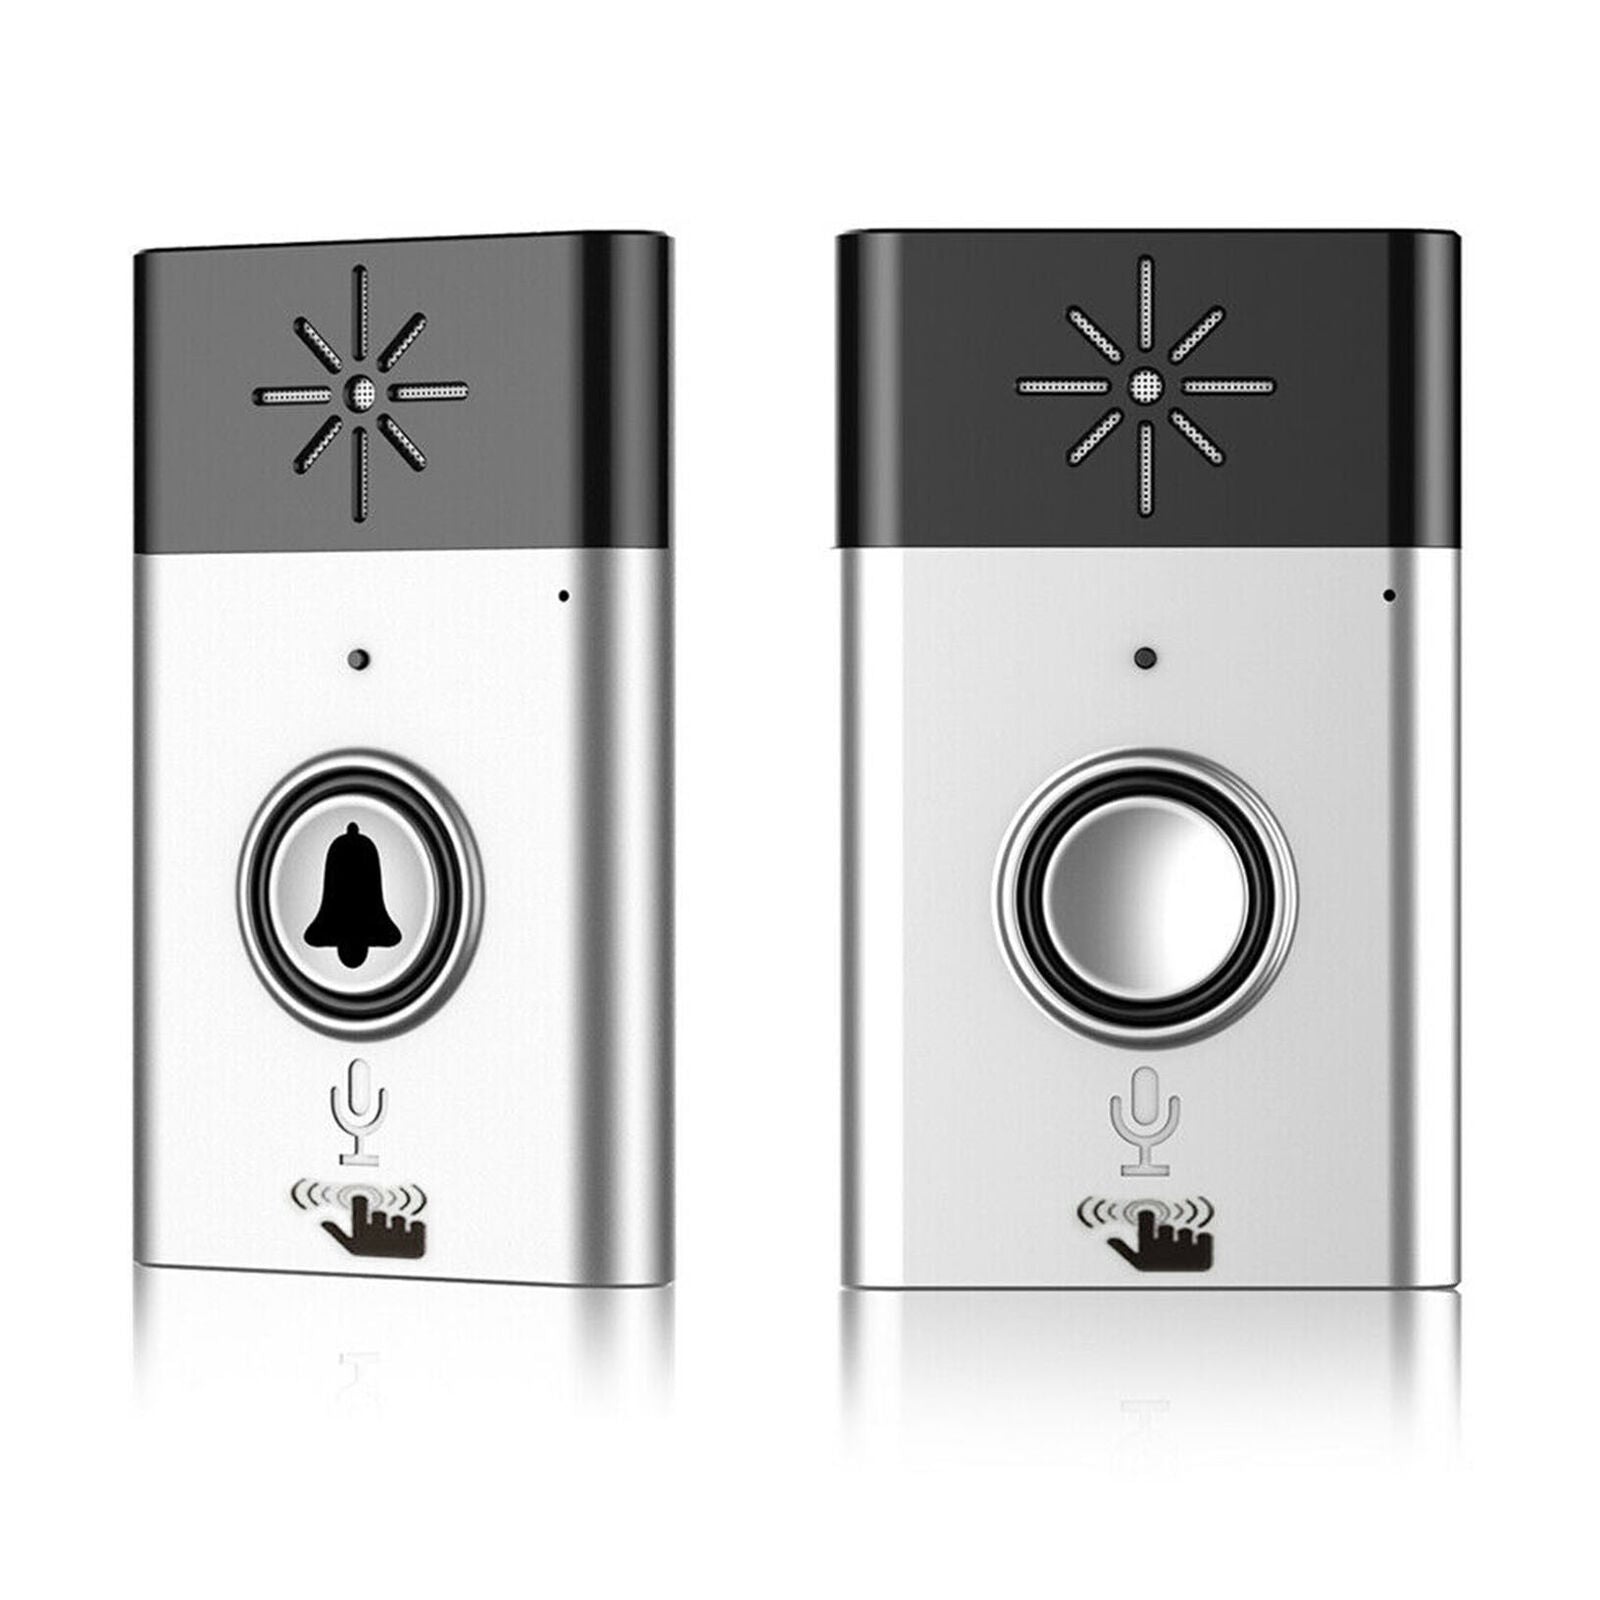 Two Way Voice Intercom 2.4G WIFI Wireless Doorbell Interphone Security System